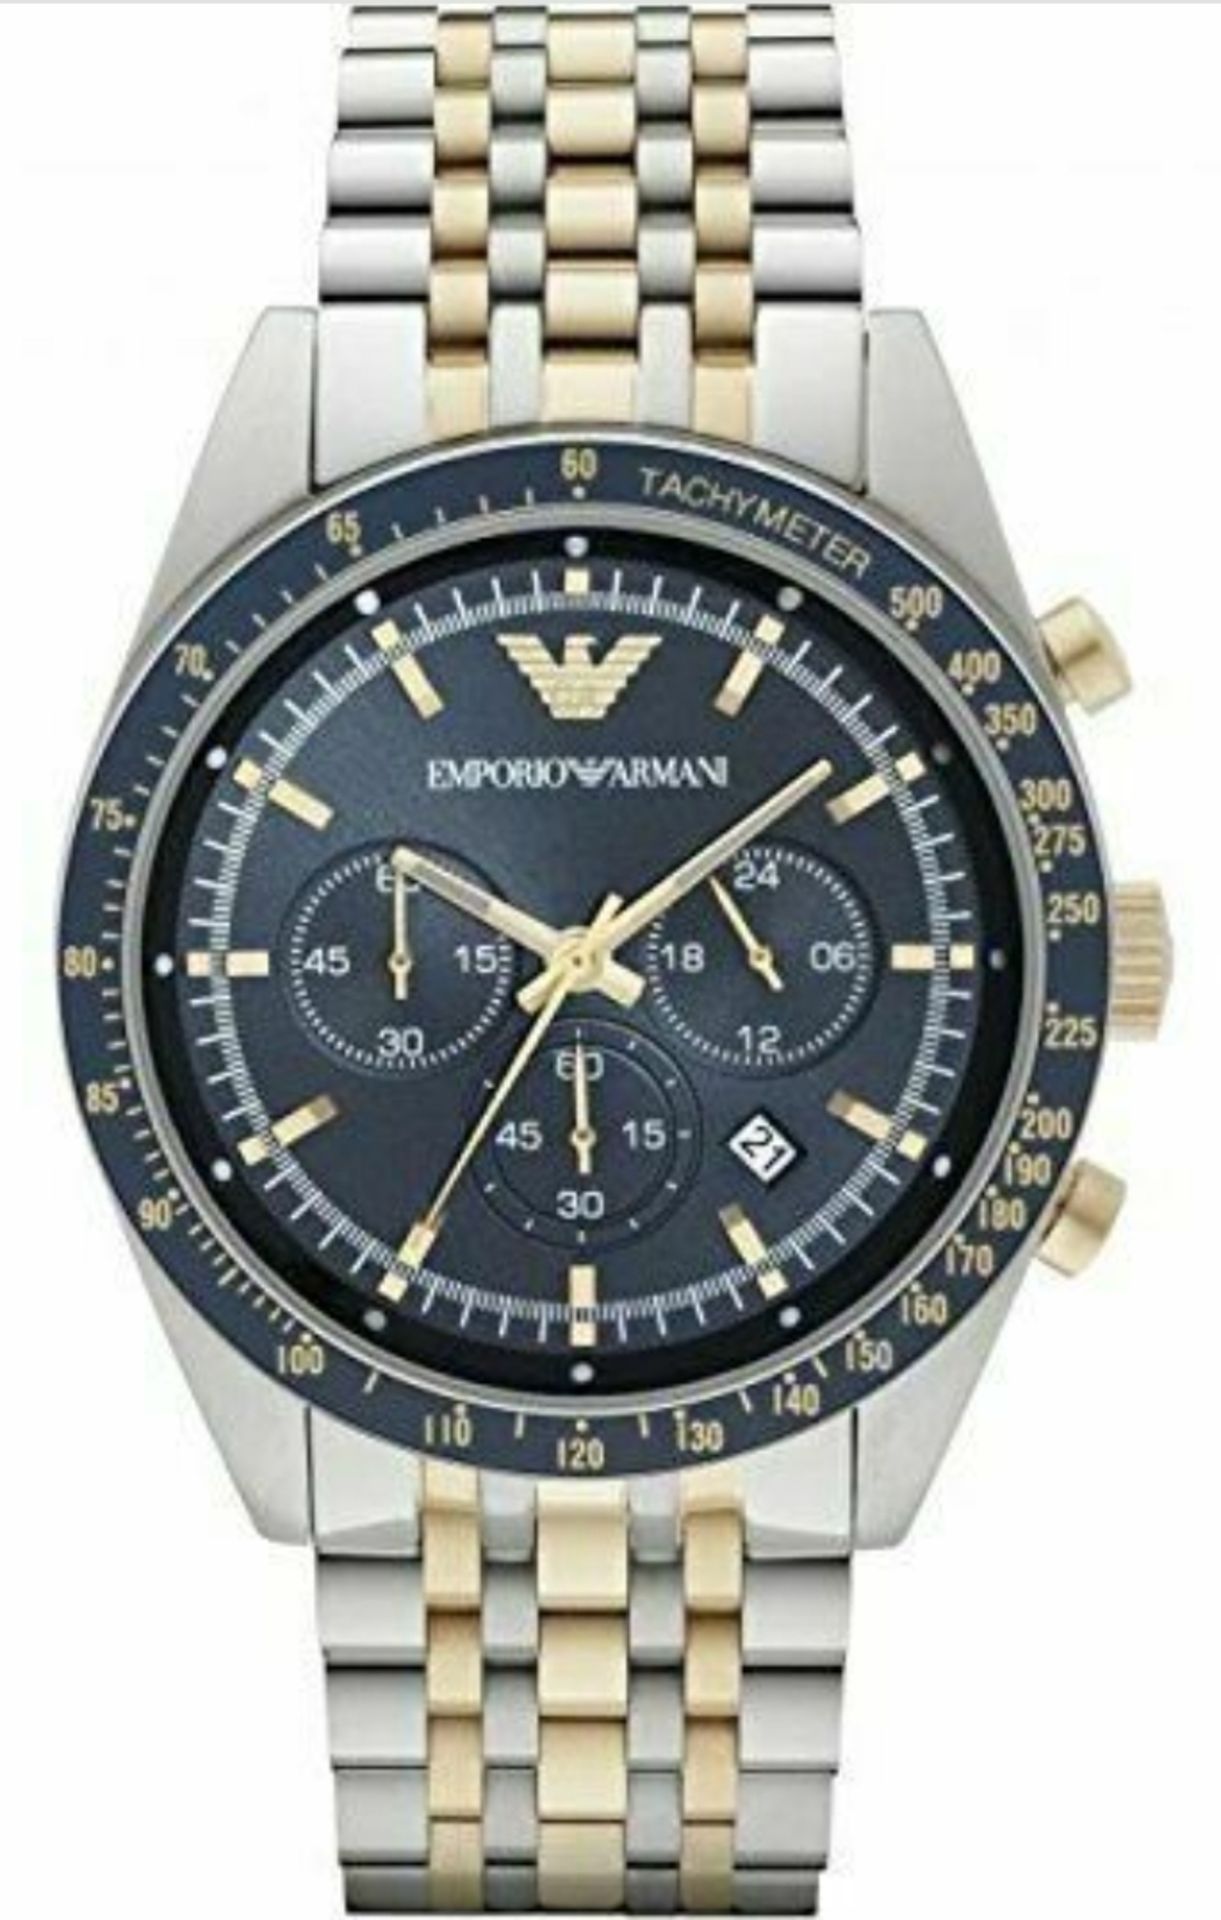 Emporio Armani AR6088 Men's Two Tone Quartz Chronograph Watch - Image 2 of 10